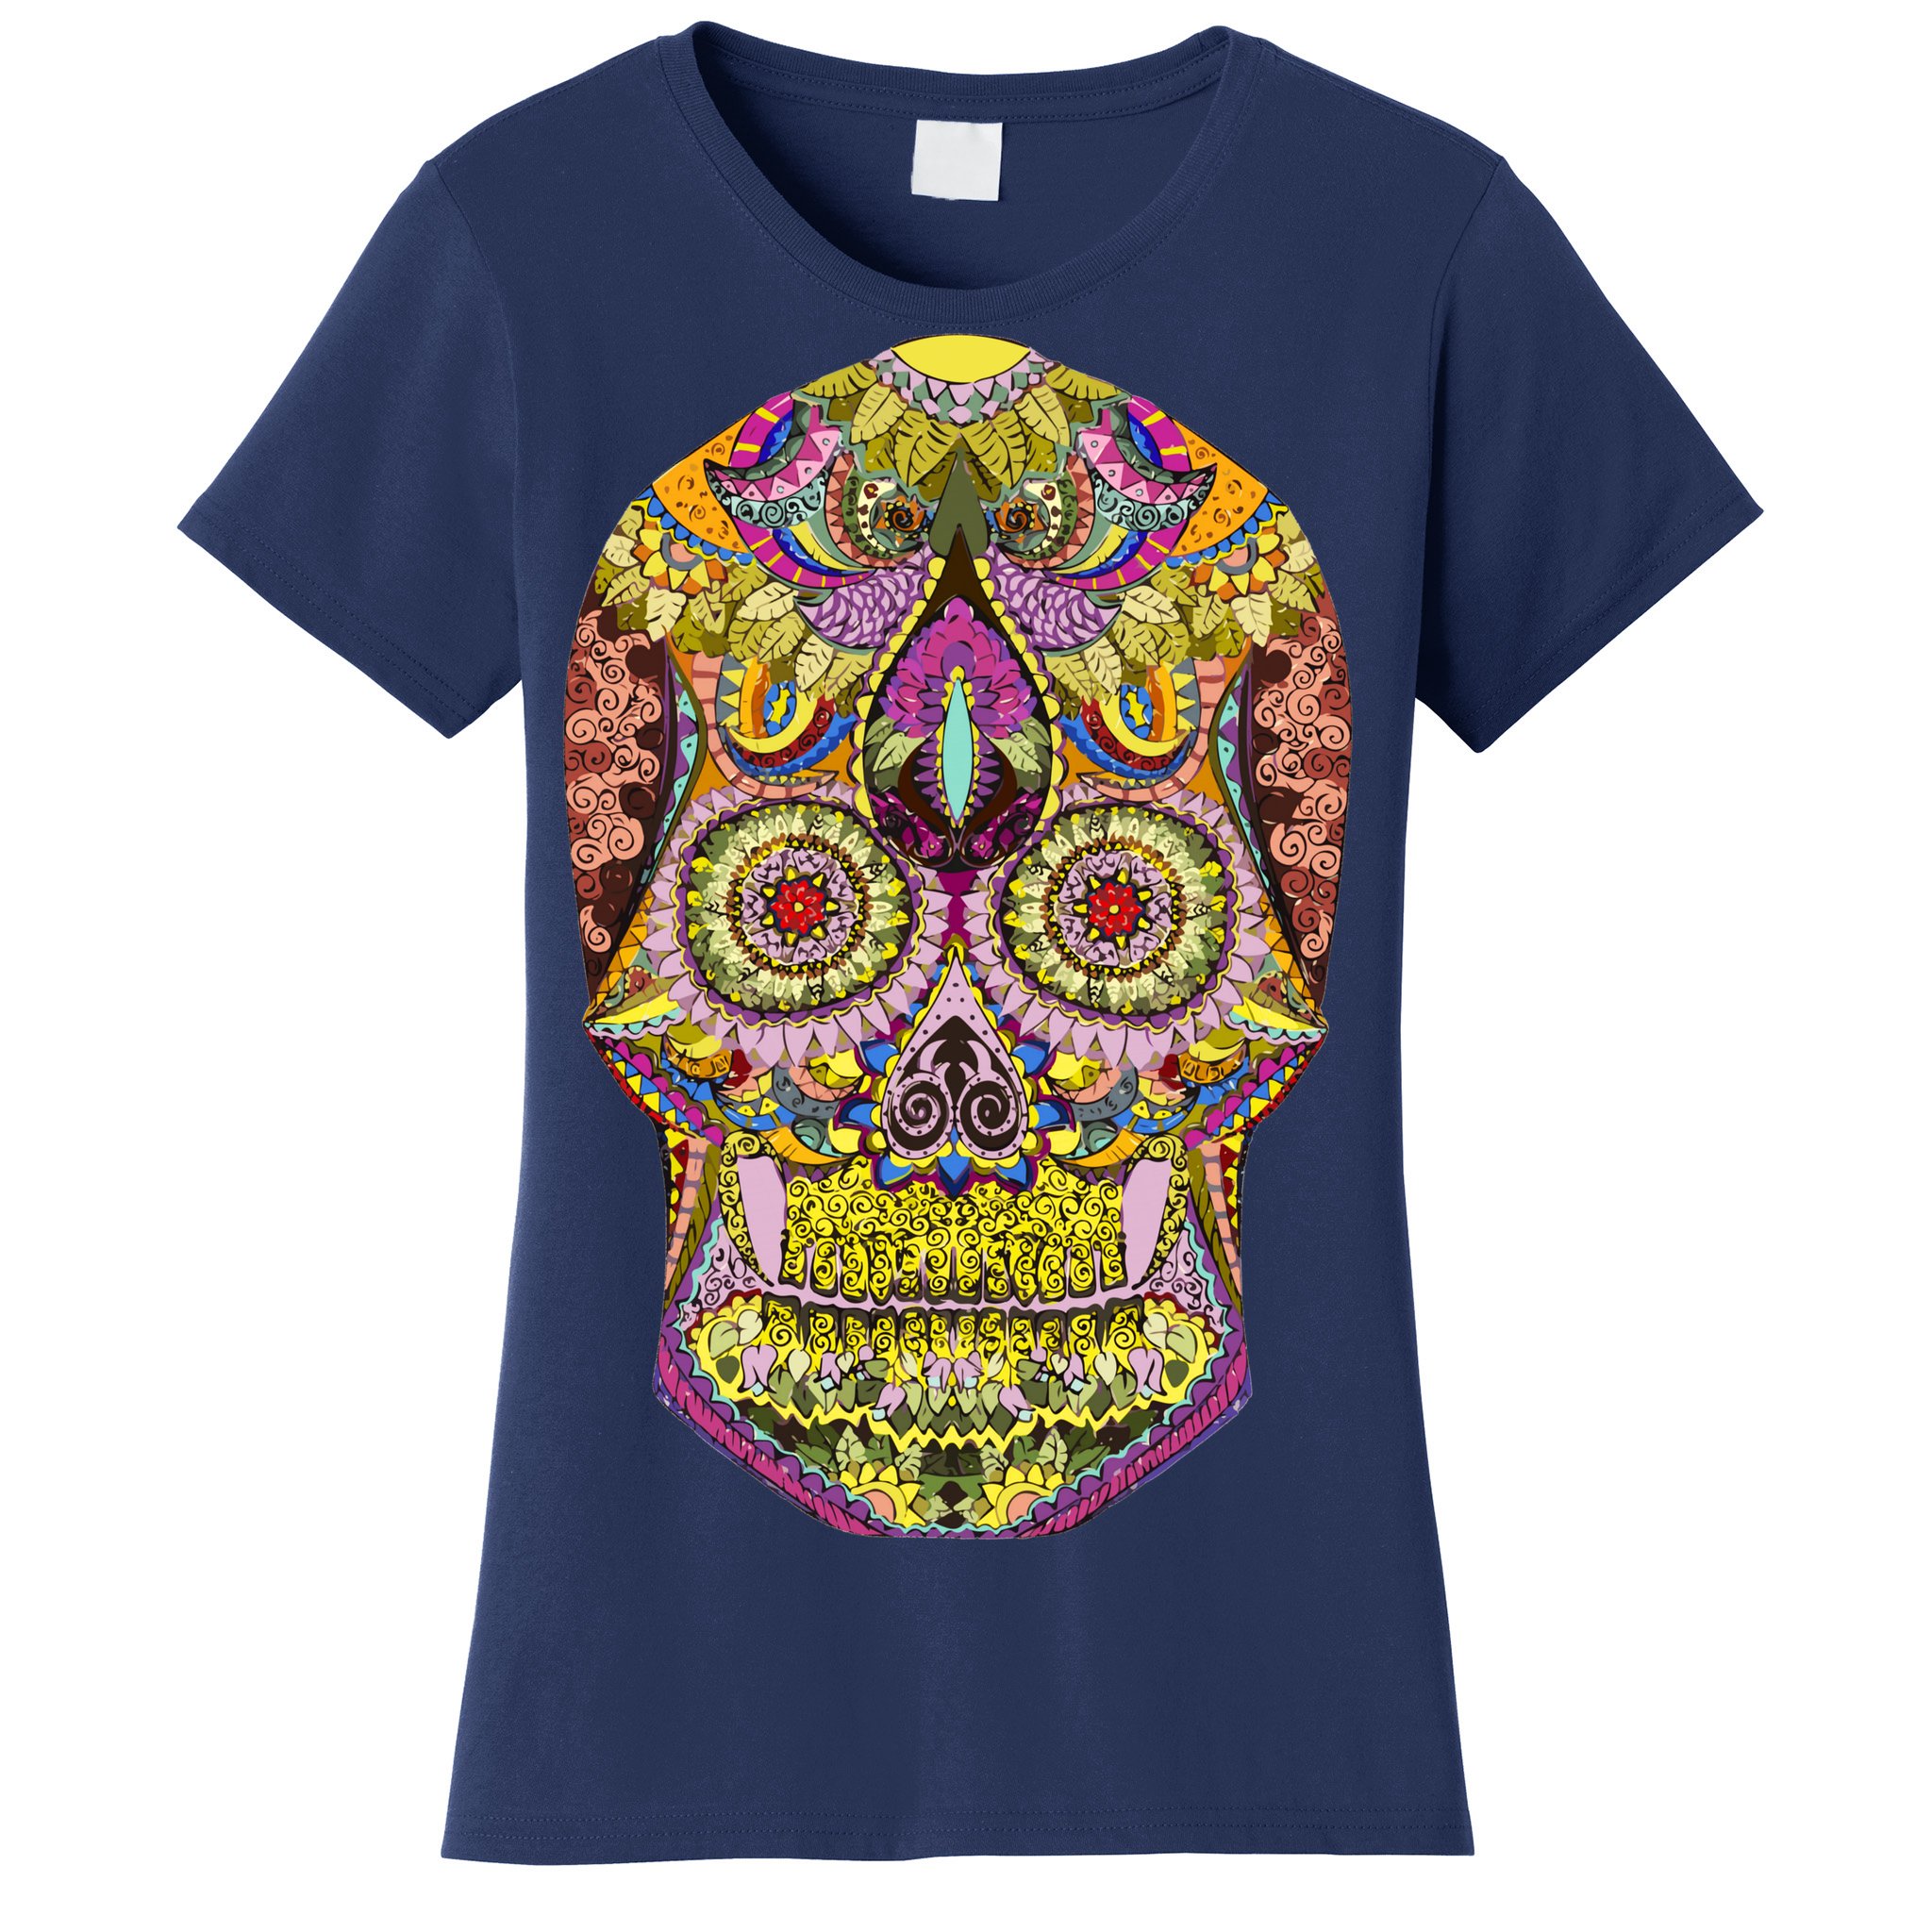 Teeshirtpalace Giant Sugar Floral Sugar Skull Women's T-Shirt